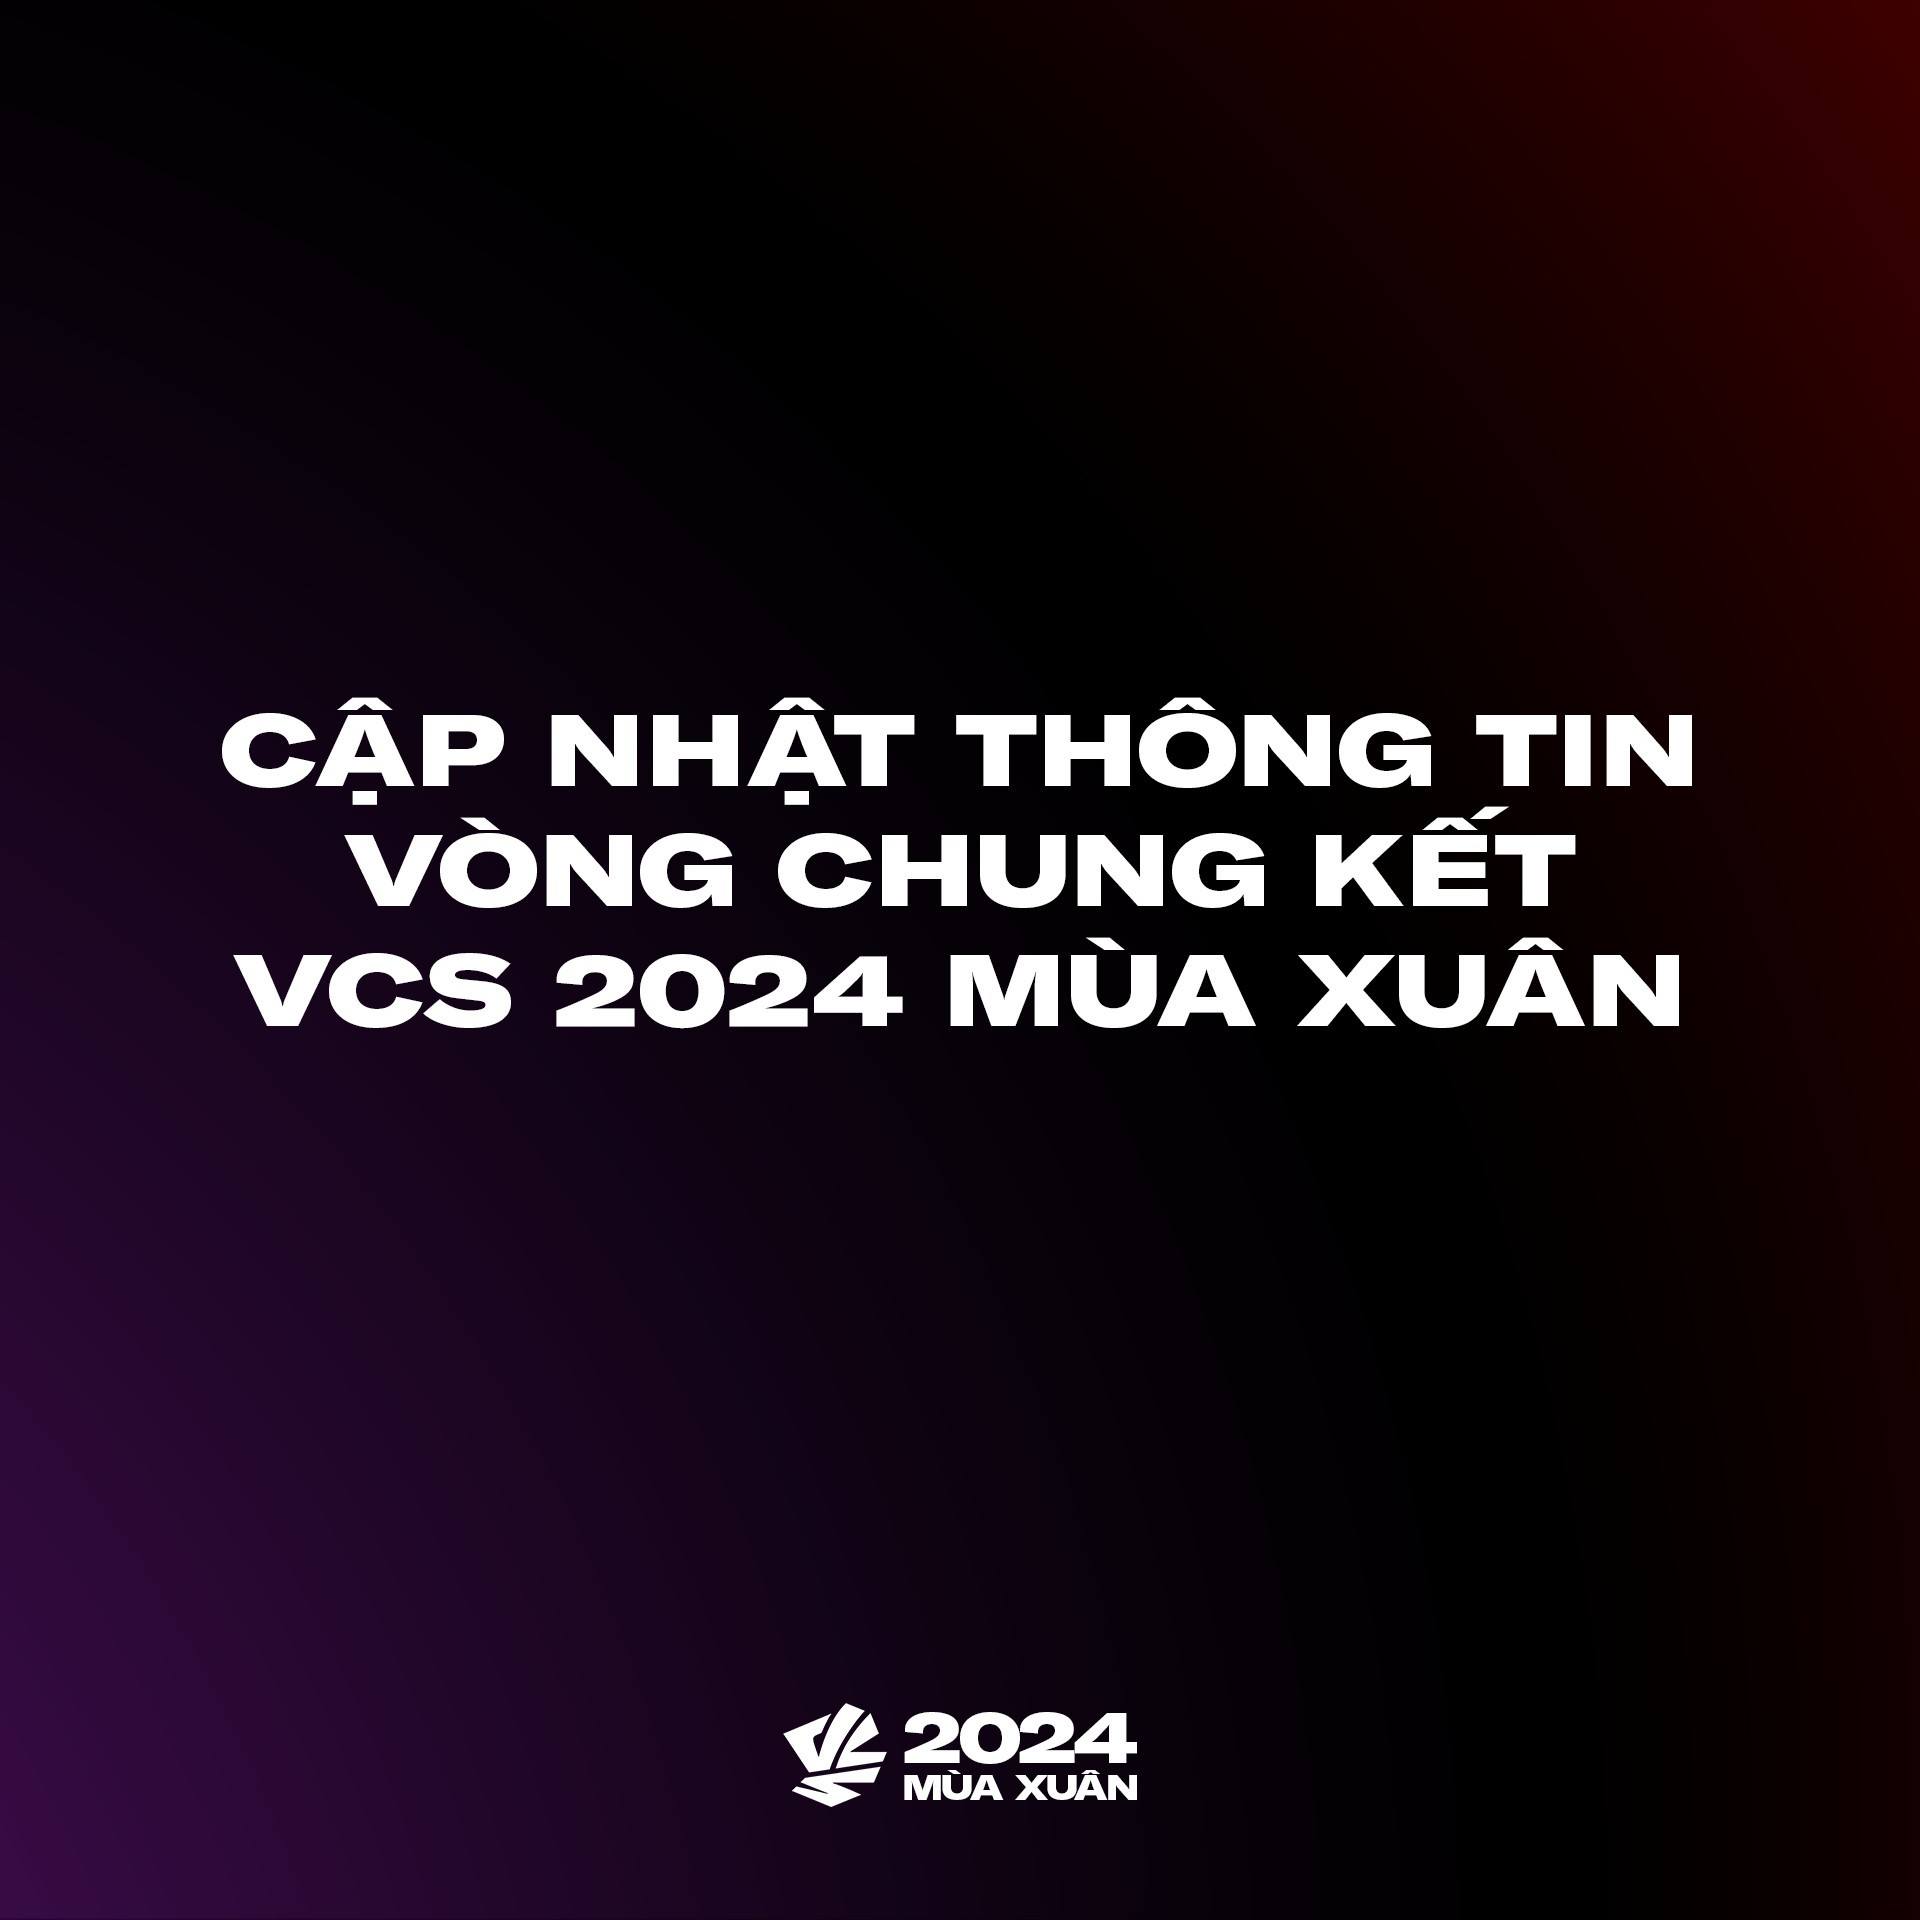 Vcs Mua Xuan 2024 Vong Chung Ket Bung No Tro Lai Voi The Thuc Moi